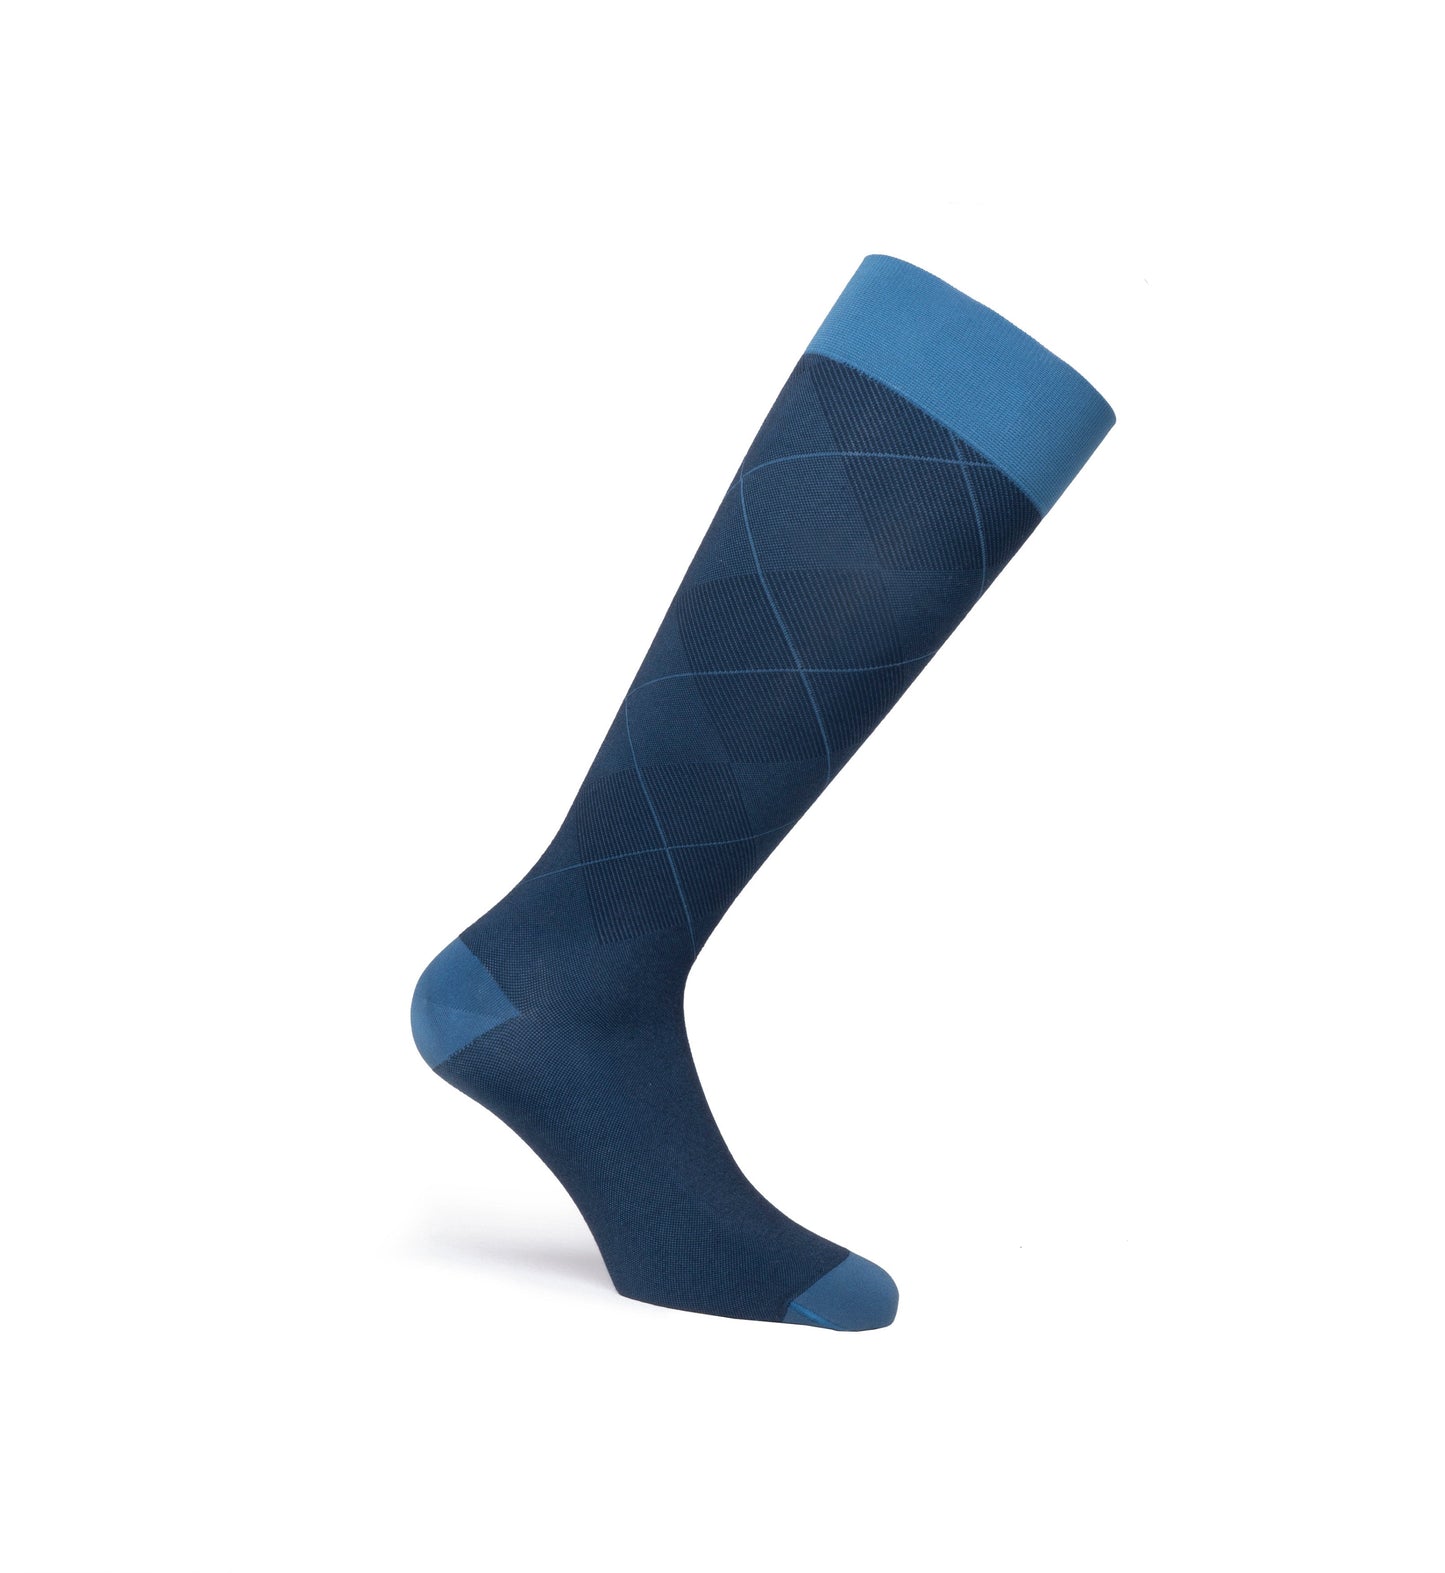 JOBST Casual Pattern Compression Socks 15-20 mmHg, Knee High, Closed Toe Full Calf